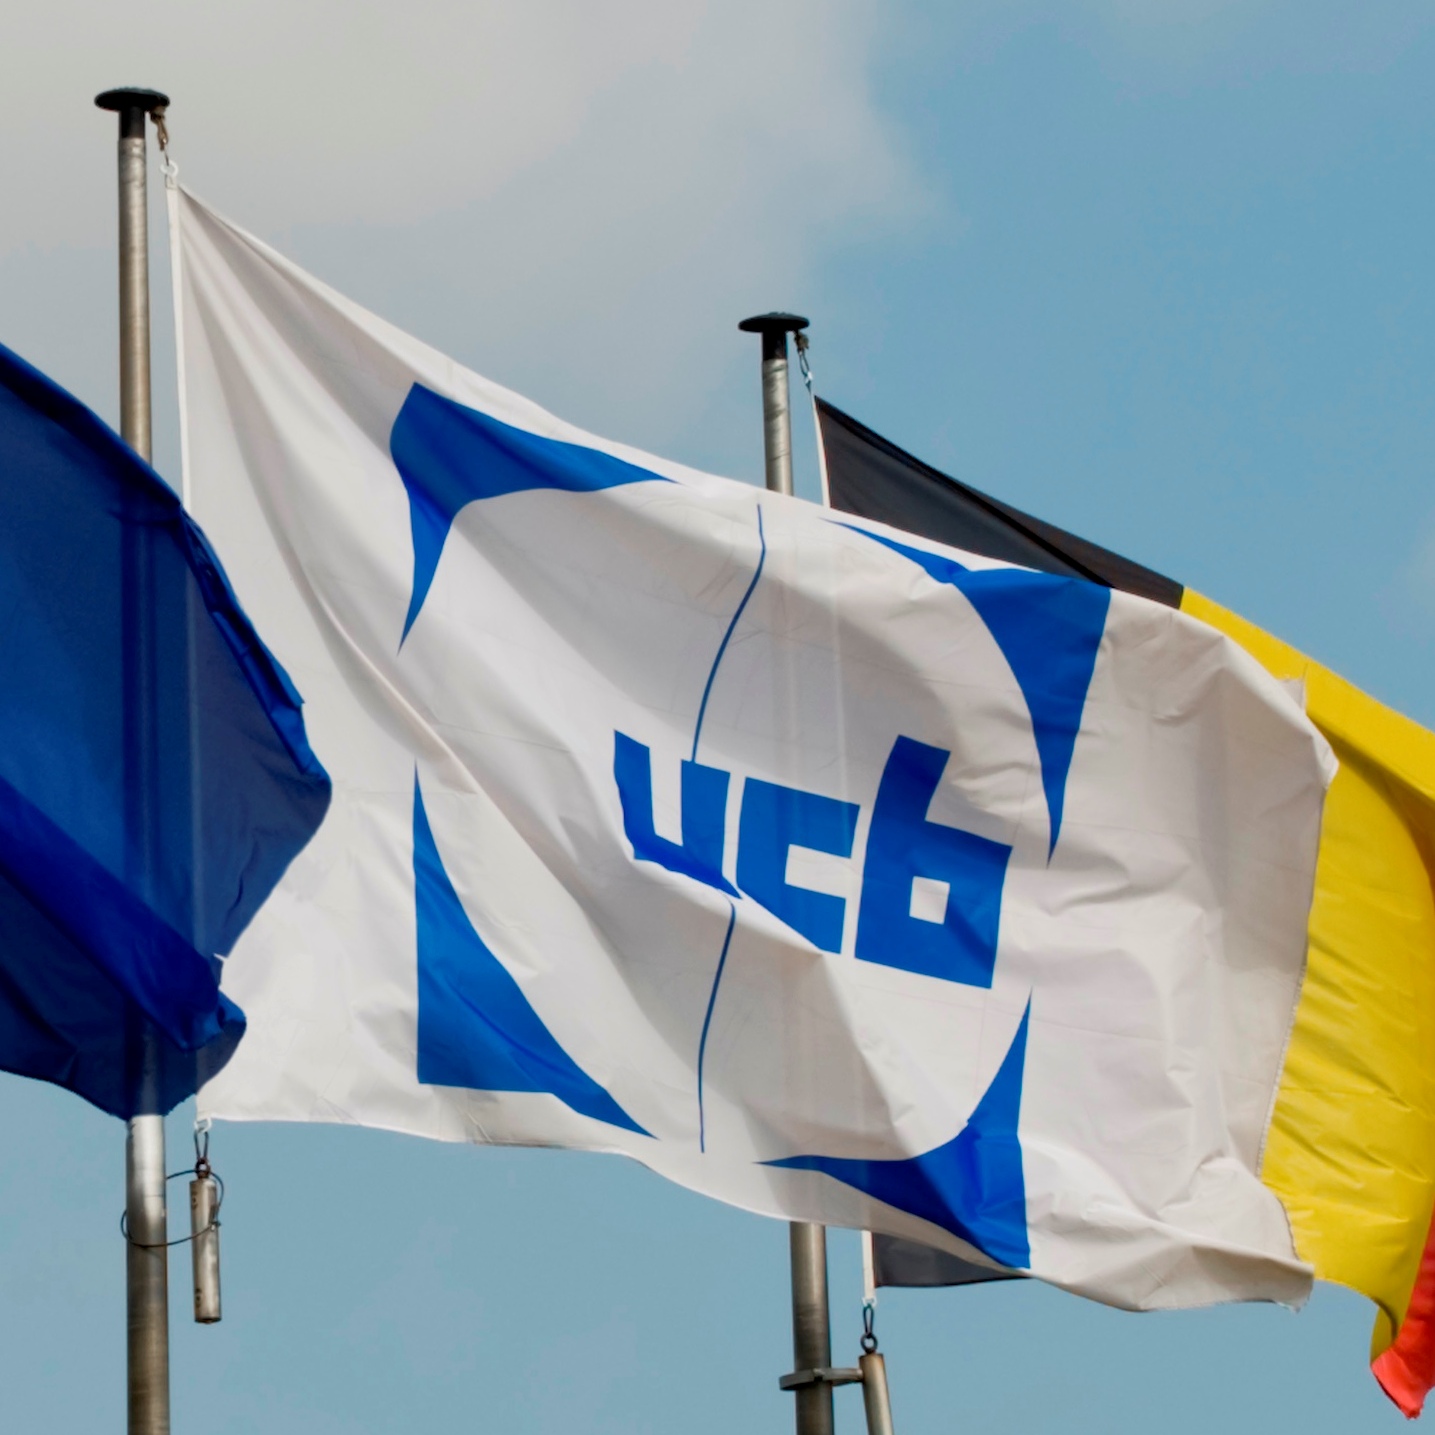 UCB logo on flag 